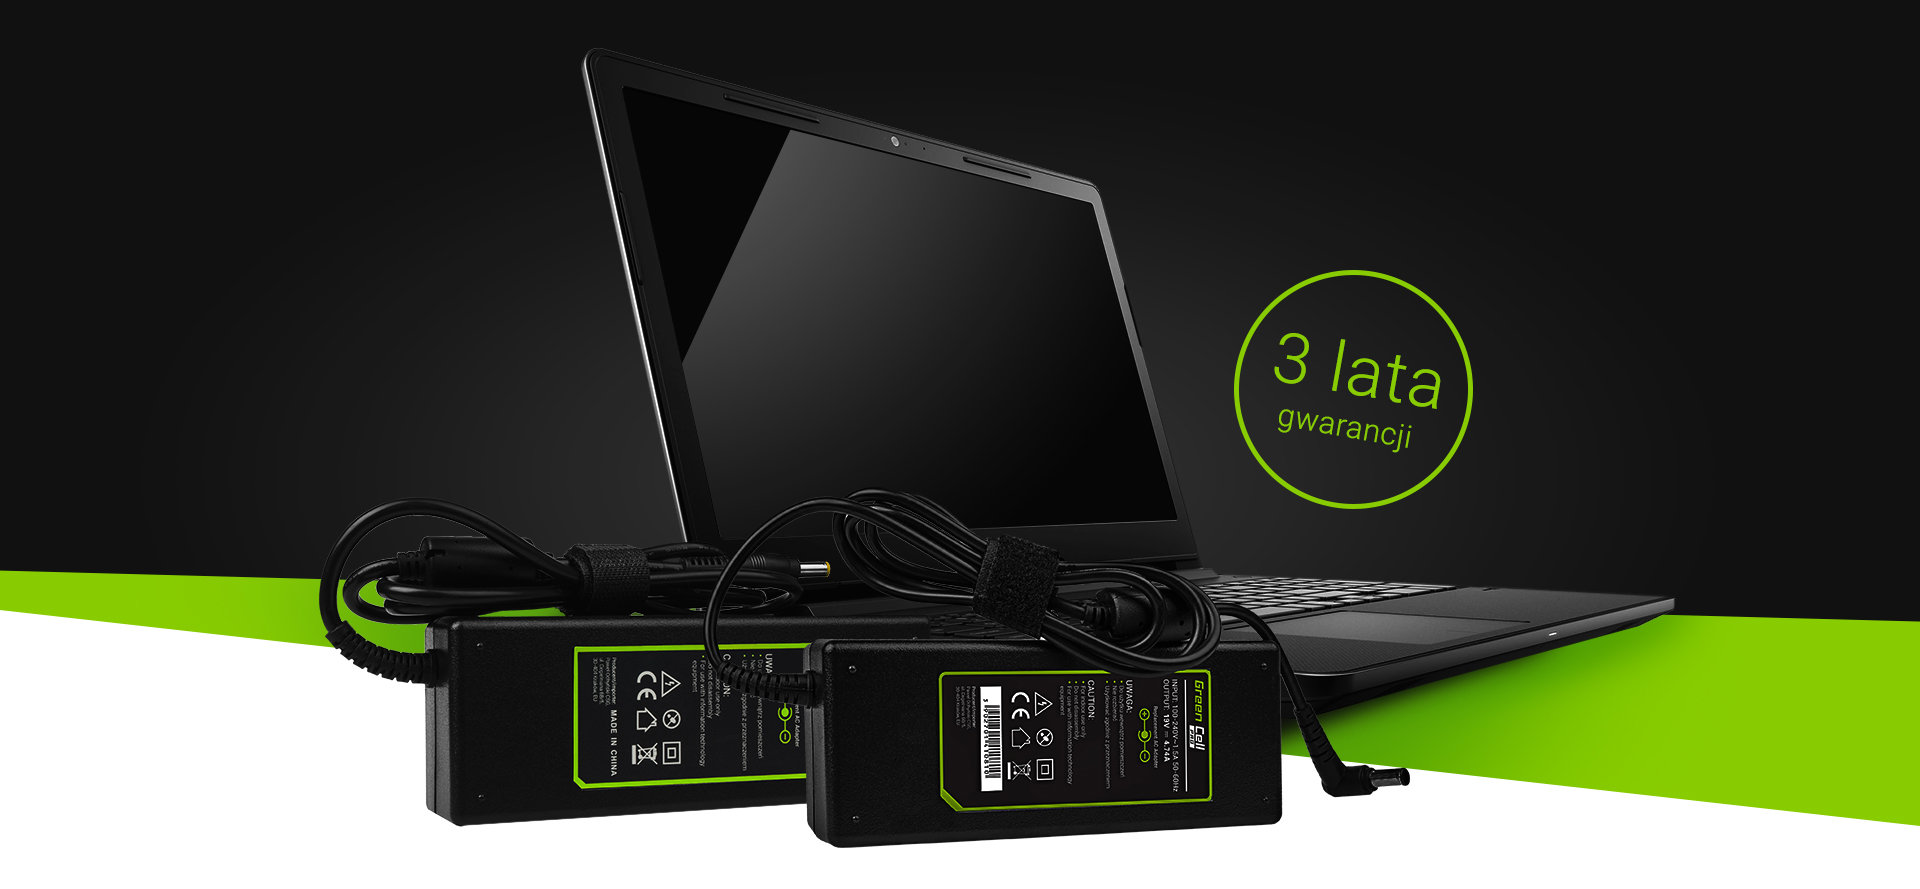  Zasilacz sieciowy Green Cell PRO do notebooka HP DV4 DV5 DV6 CQ40 CQ50 CQ60 DM4-1000 Probook 4510s Compaq 6720s 18,5V 3,5A